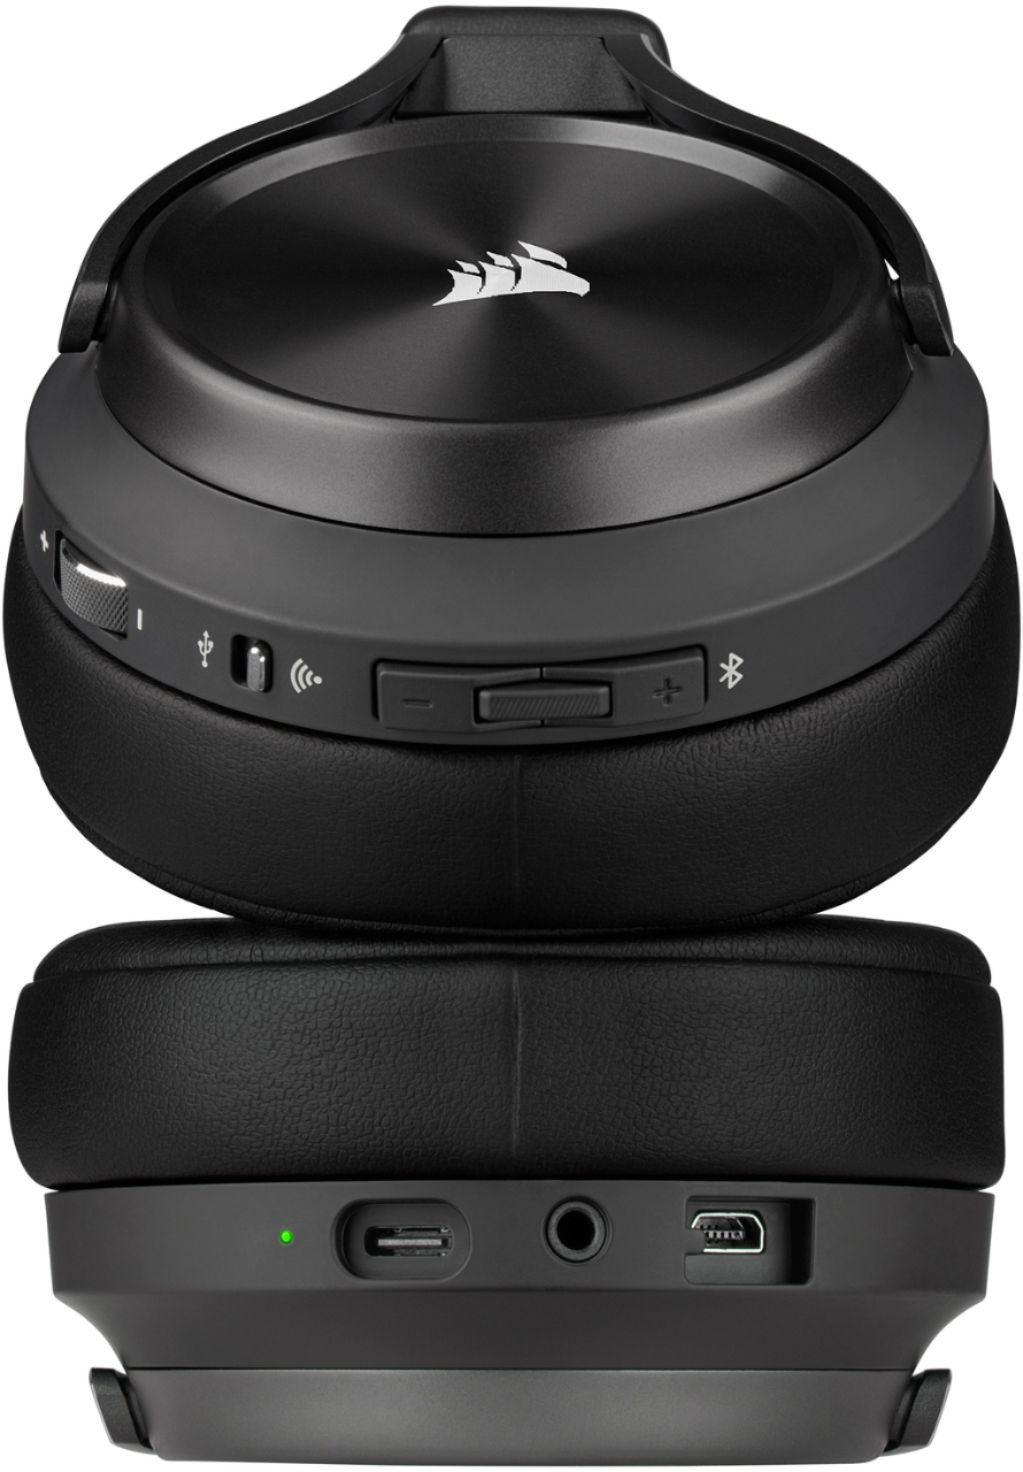 CORSAIR VIRTUOSO XT Wireless Gaming Headset for PC, Mac, PS5, PS4